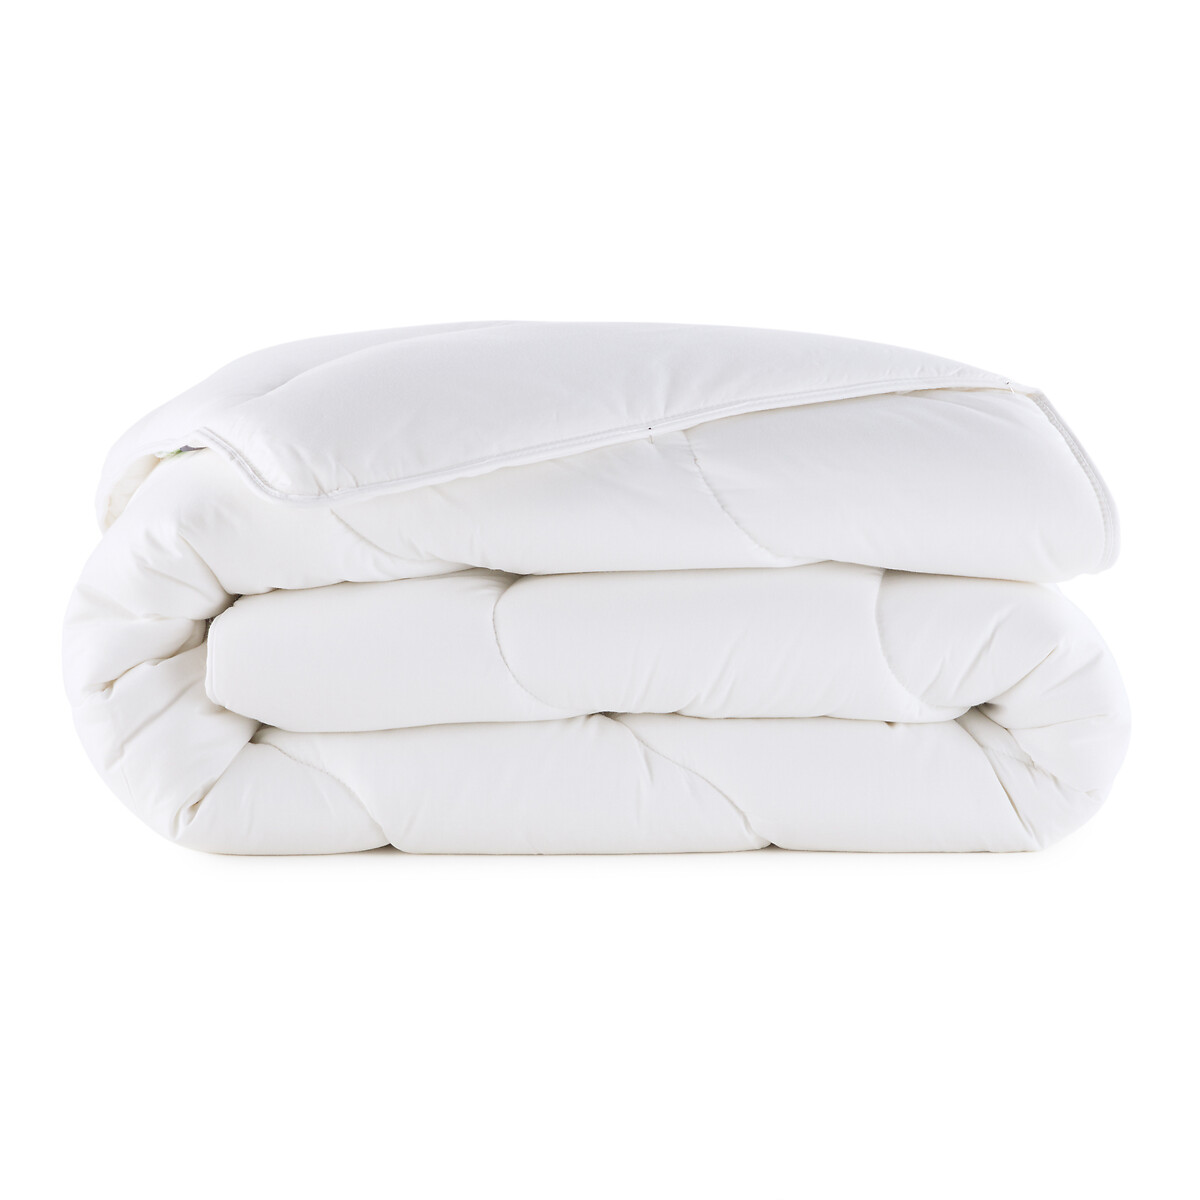 Одеяло La Redoute Синтетическое  гм с обработкой Proneem 240 x 220 см белый, размер 240 x 220 см - фото 2